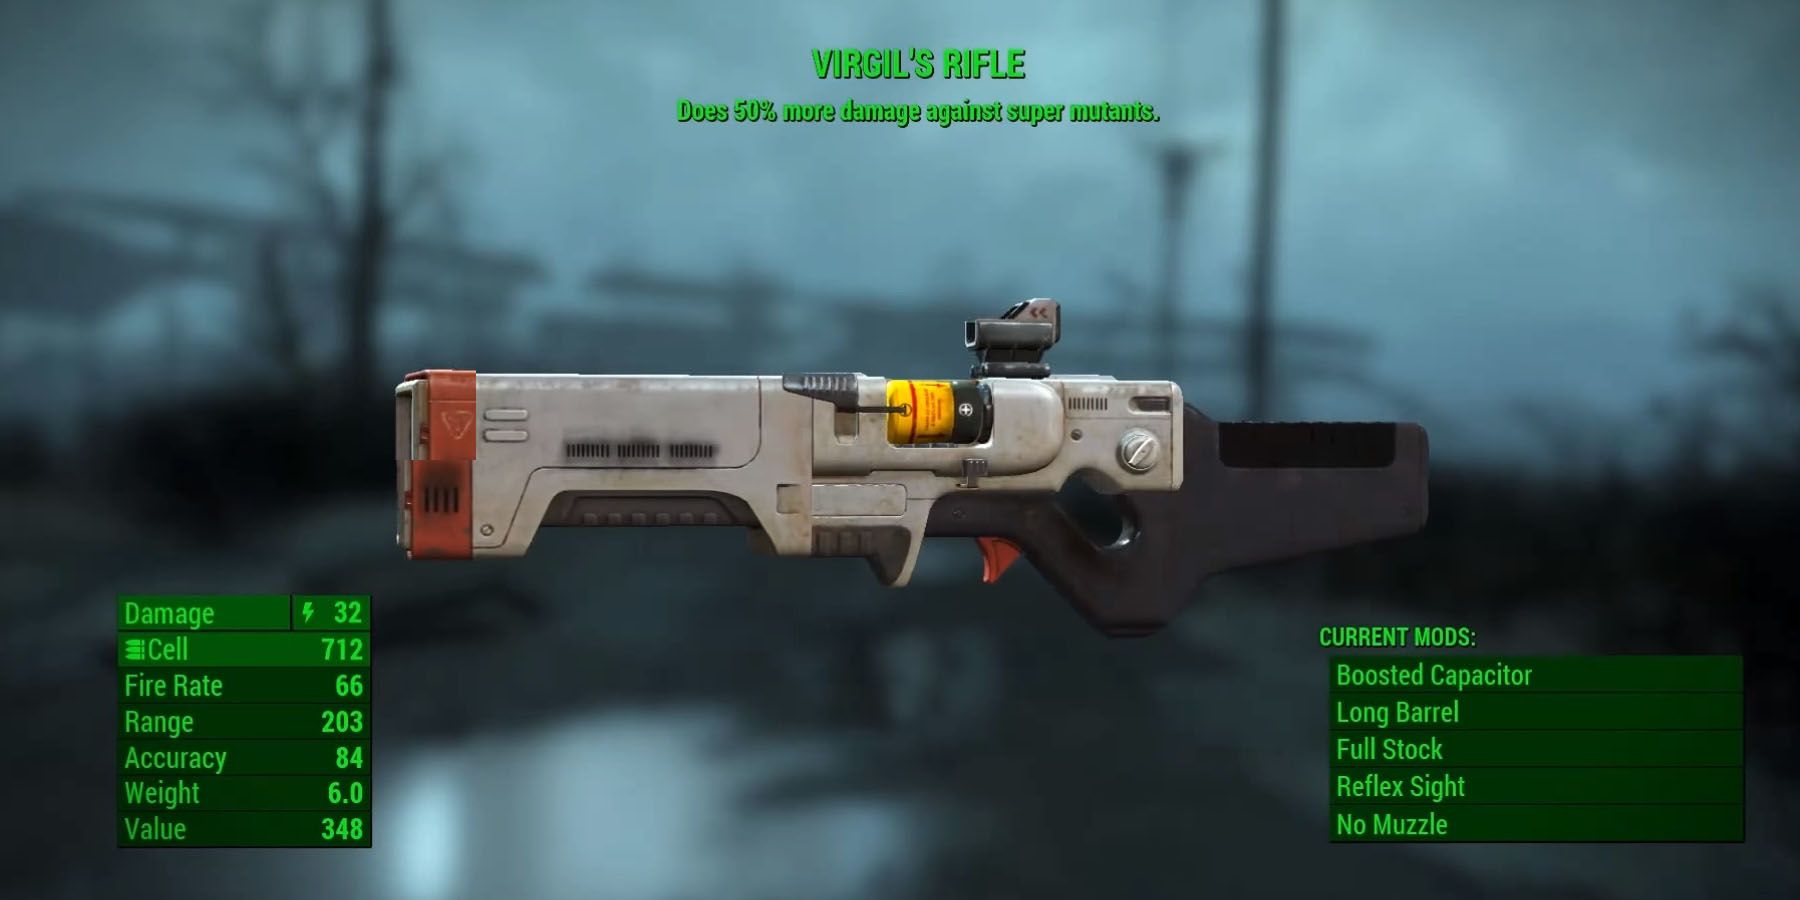 Virgils Rifle